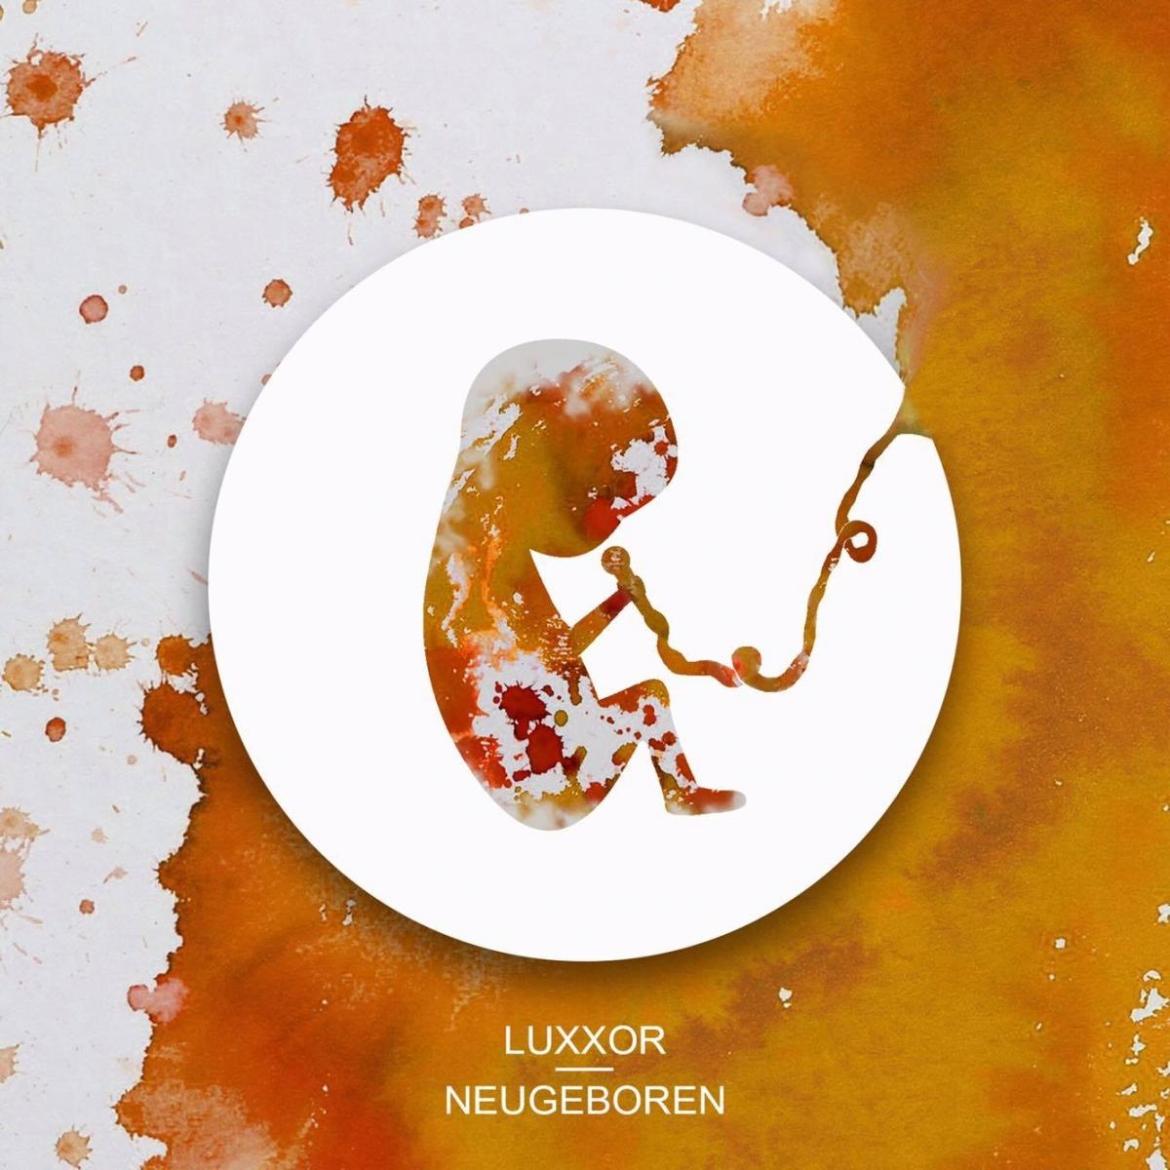 Neugeboren, Luxxor, EP, Nrw, Germany, Newcomer